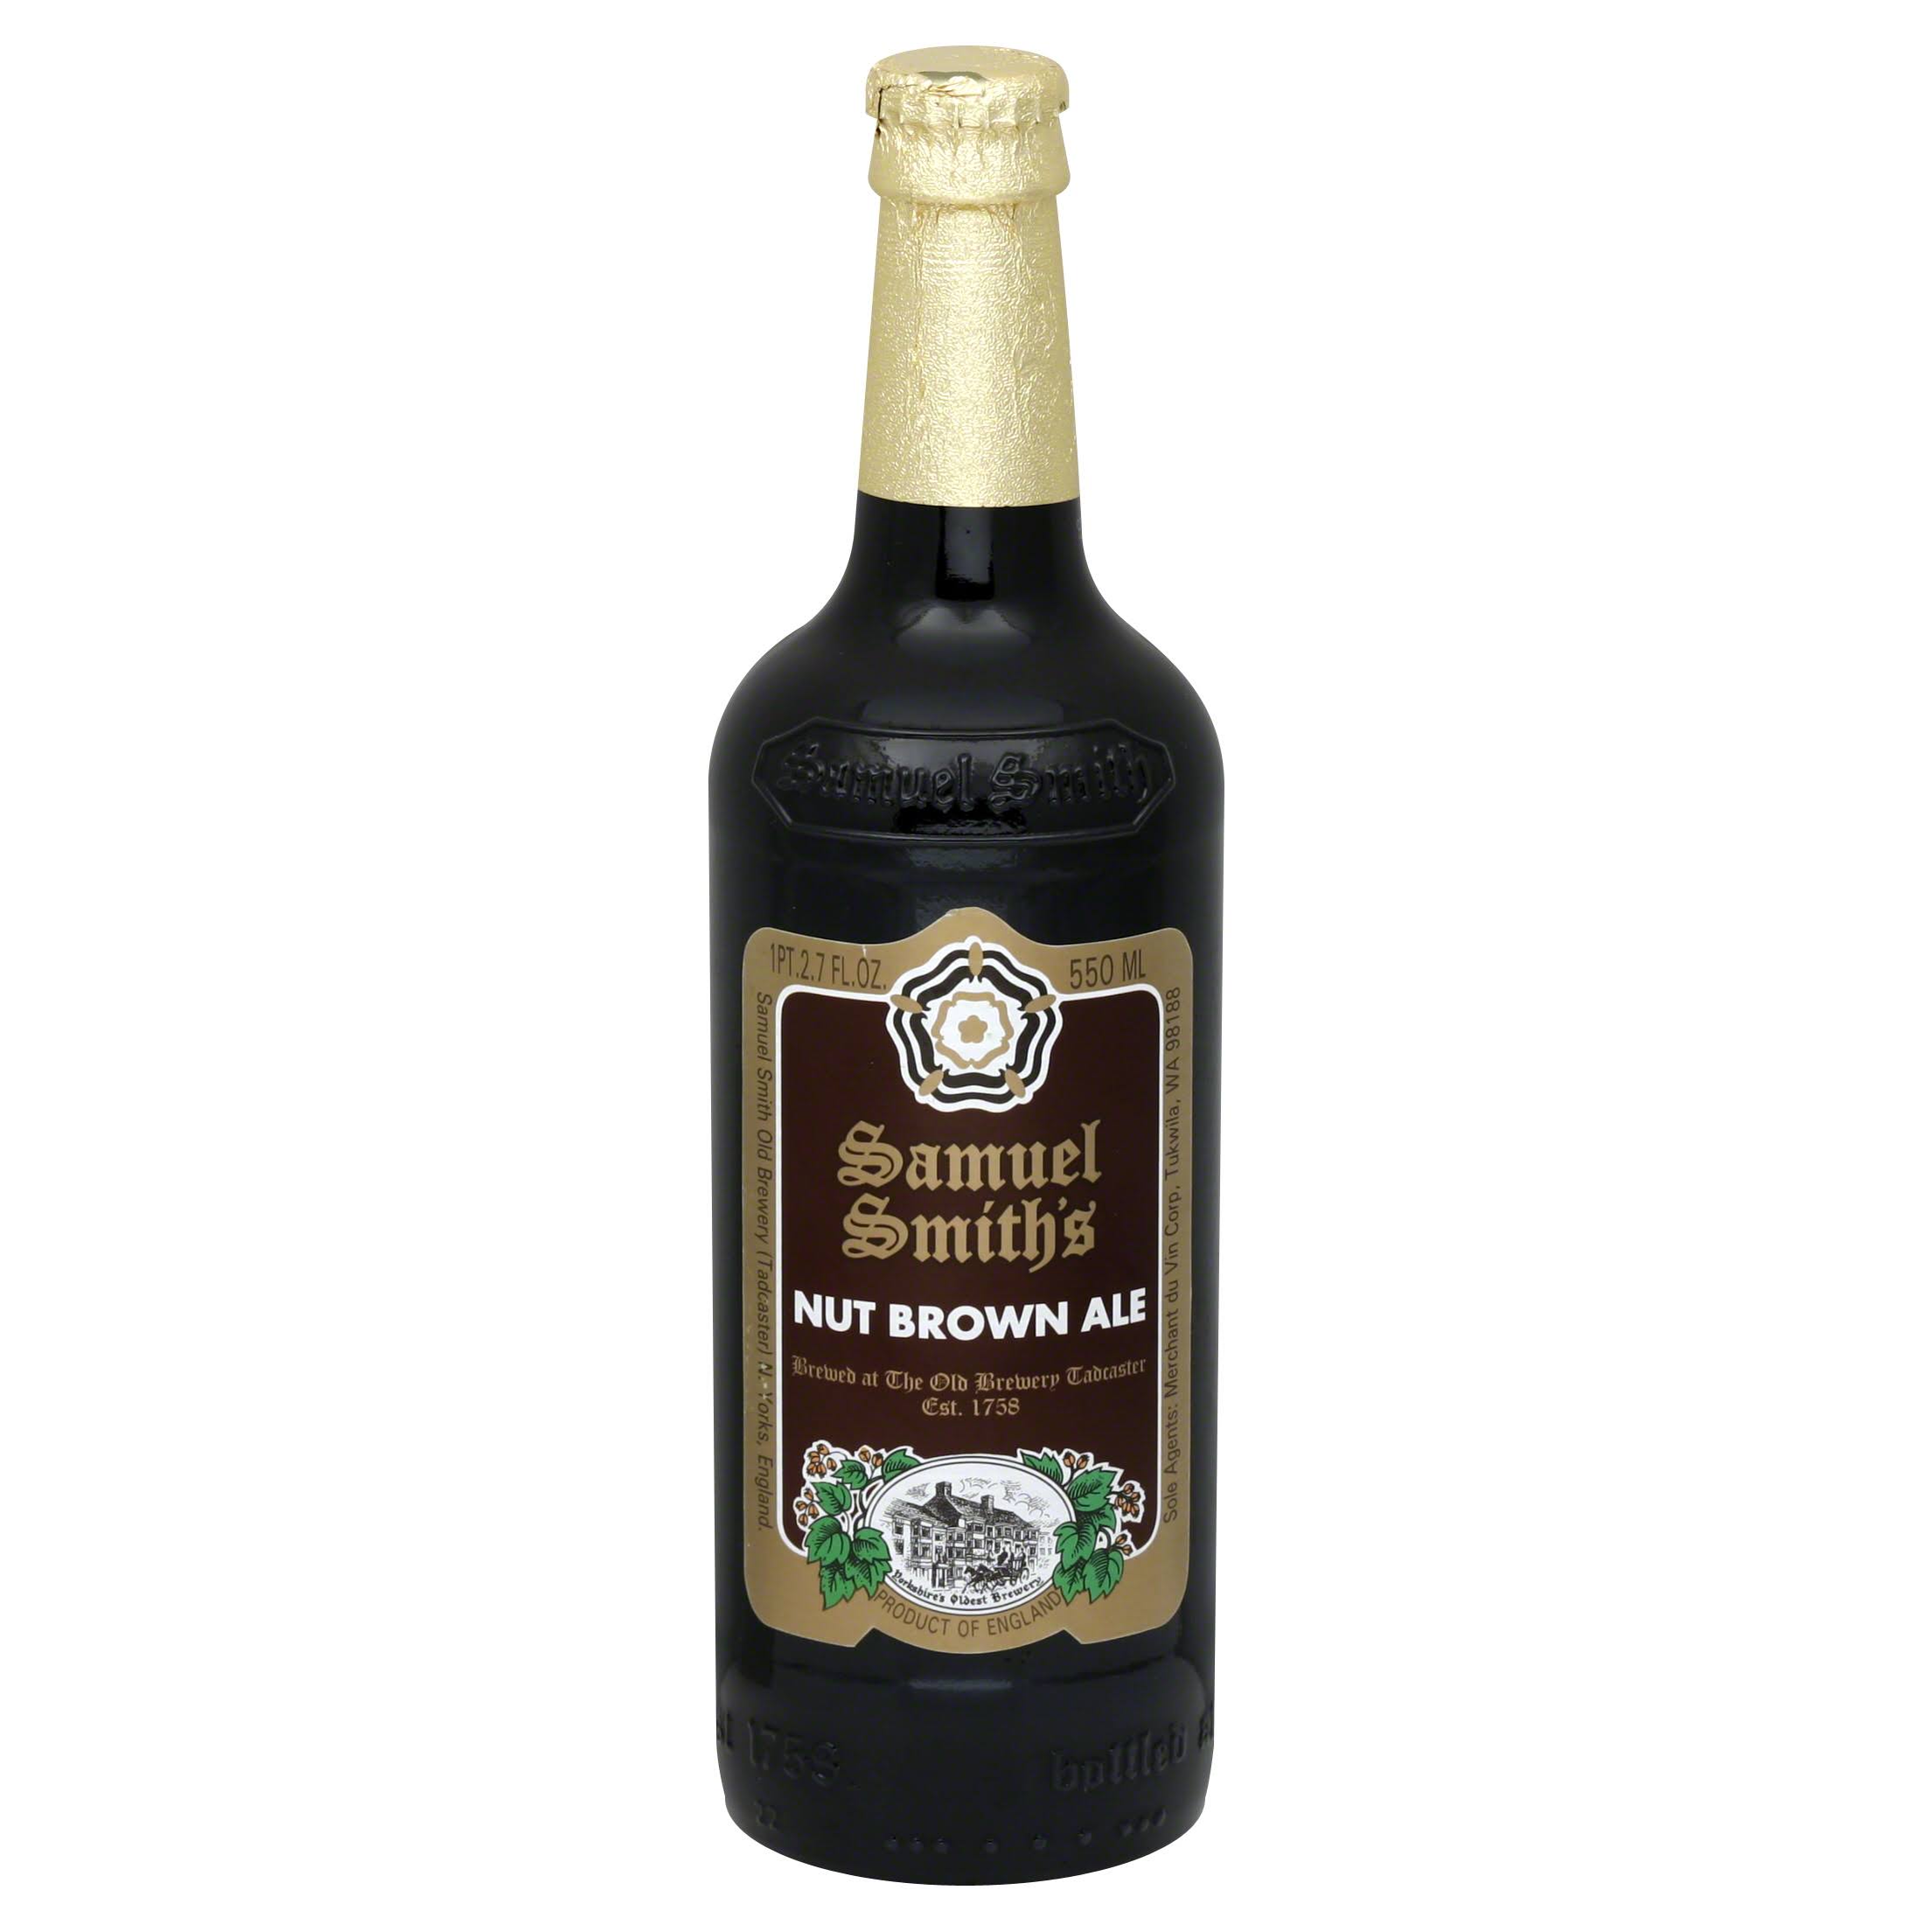 Samuel Smith's Nut Brown Ale - 550ml